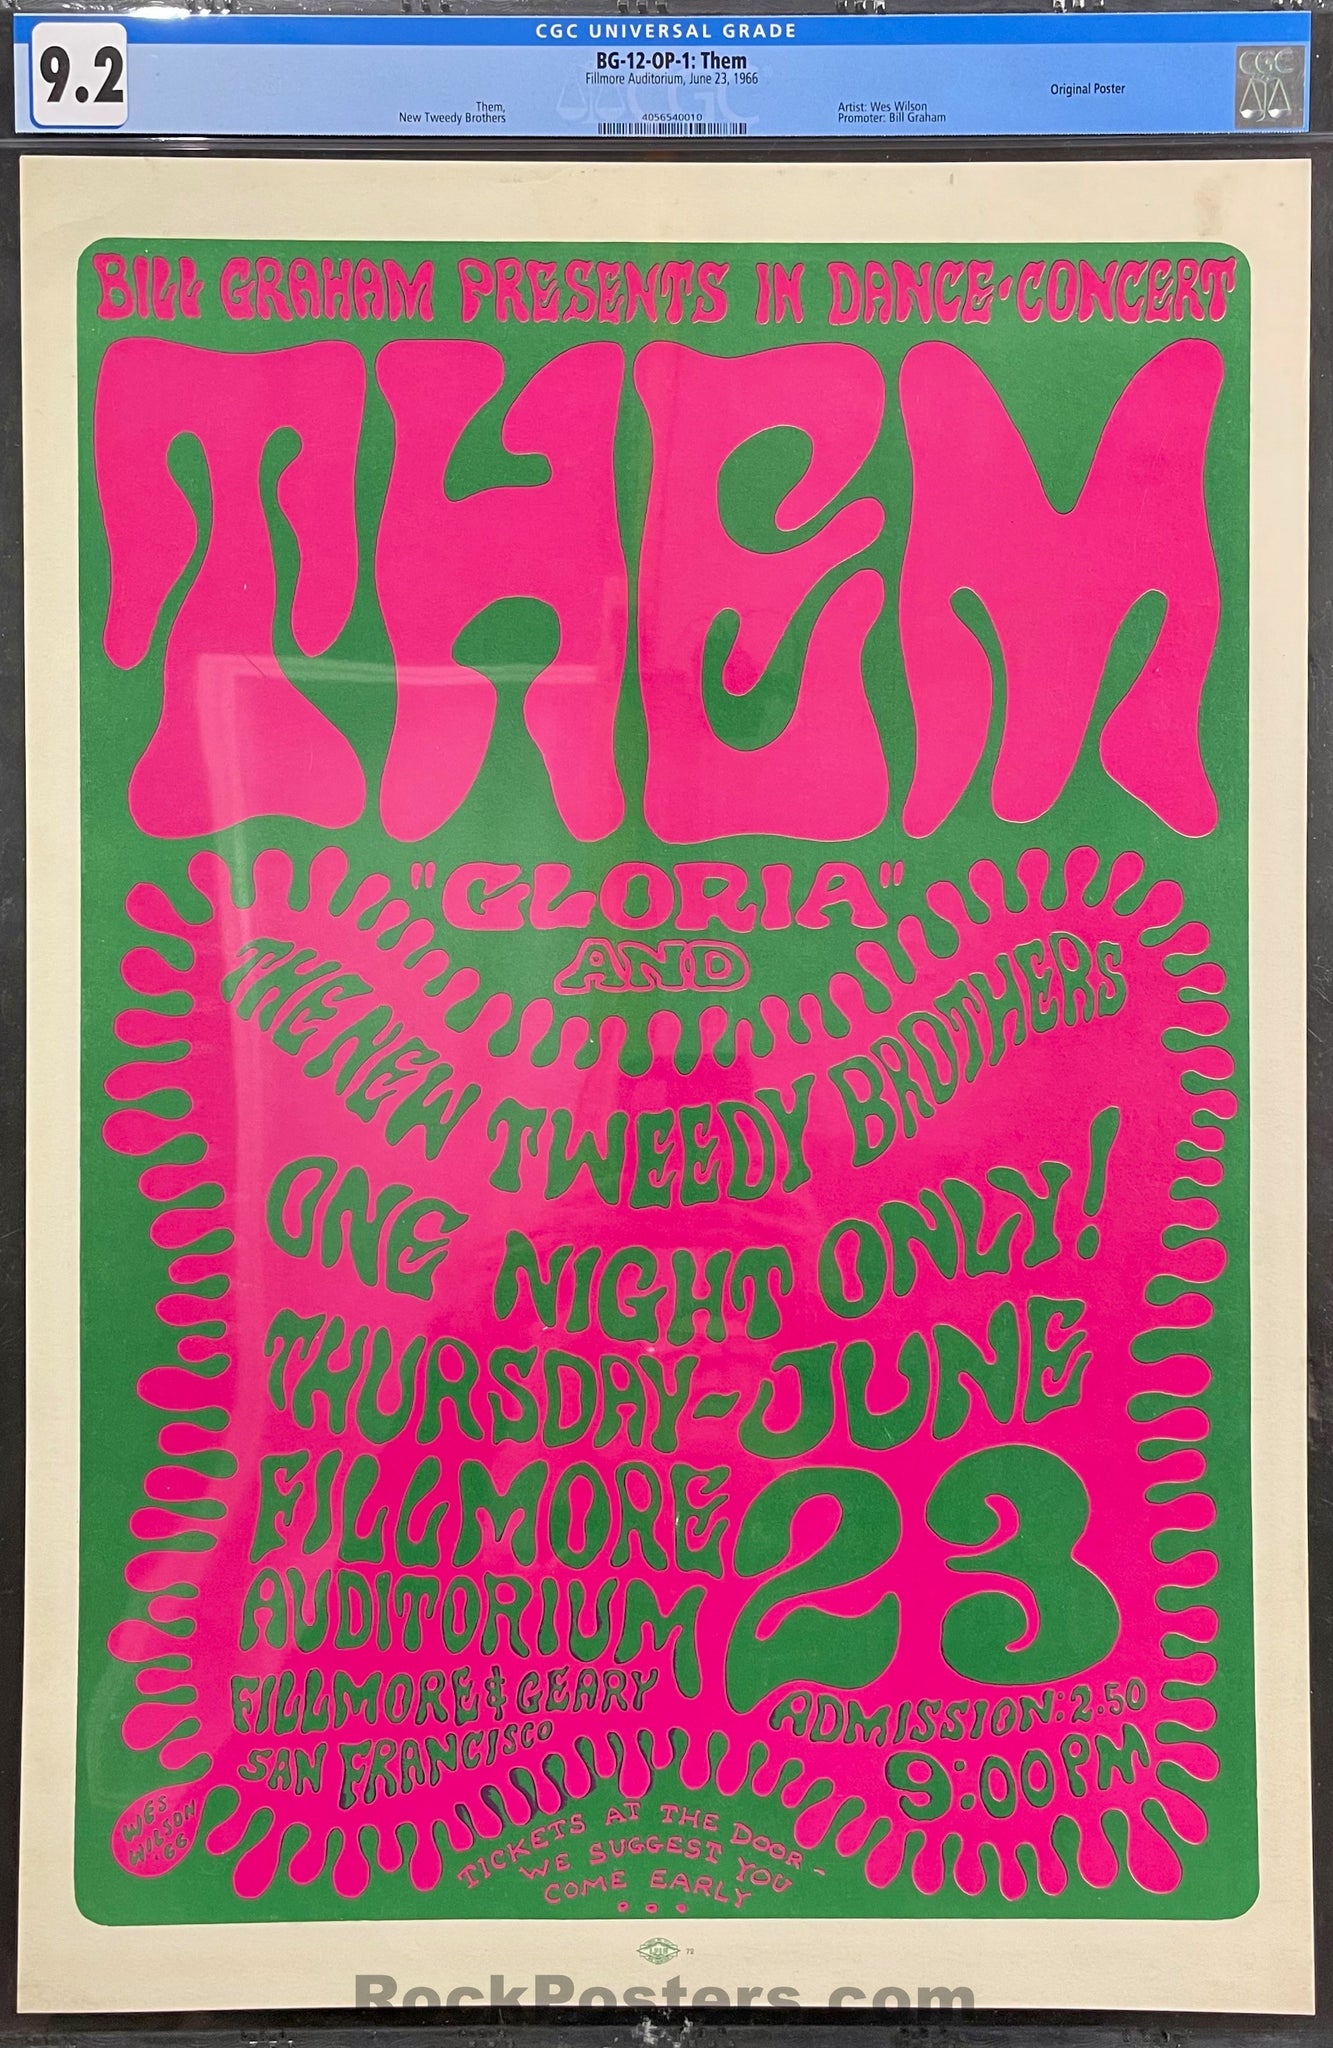 AUCTION - BG-12 - Them Van Morrison - 1966 Poster - Fillmore Auditorium - CGC Graded 9.2